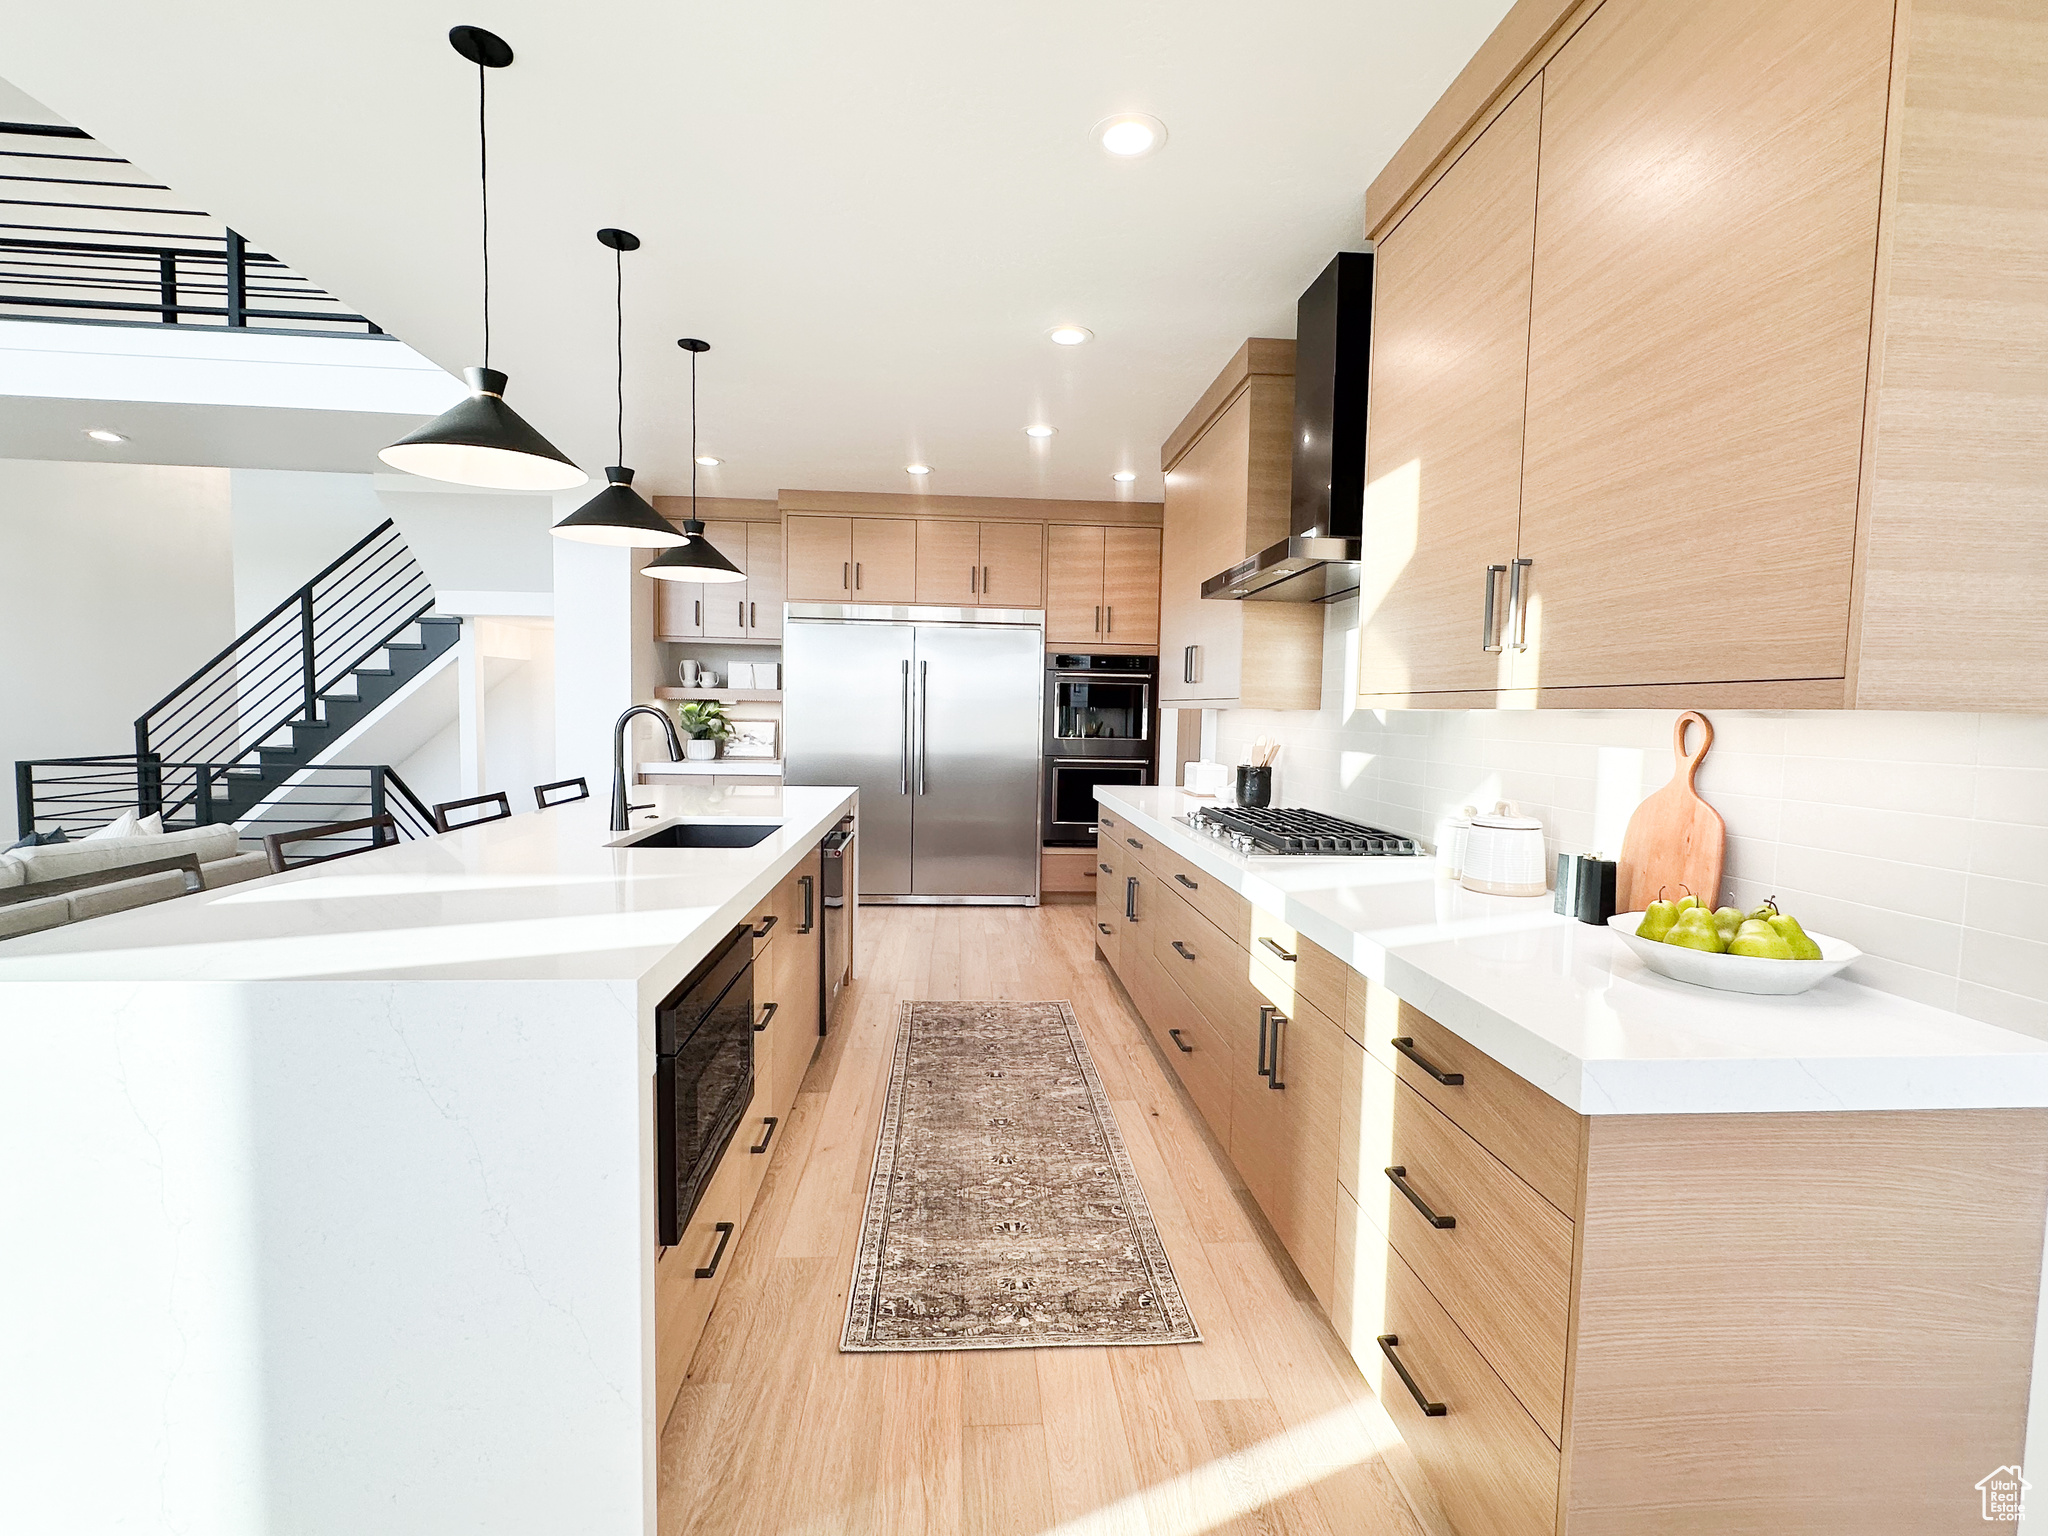 Kitchen with wall chimney range hood, light hardwood / wood-style flooring, tasteful backsplash, built in appliances, and sink